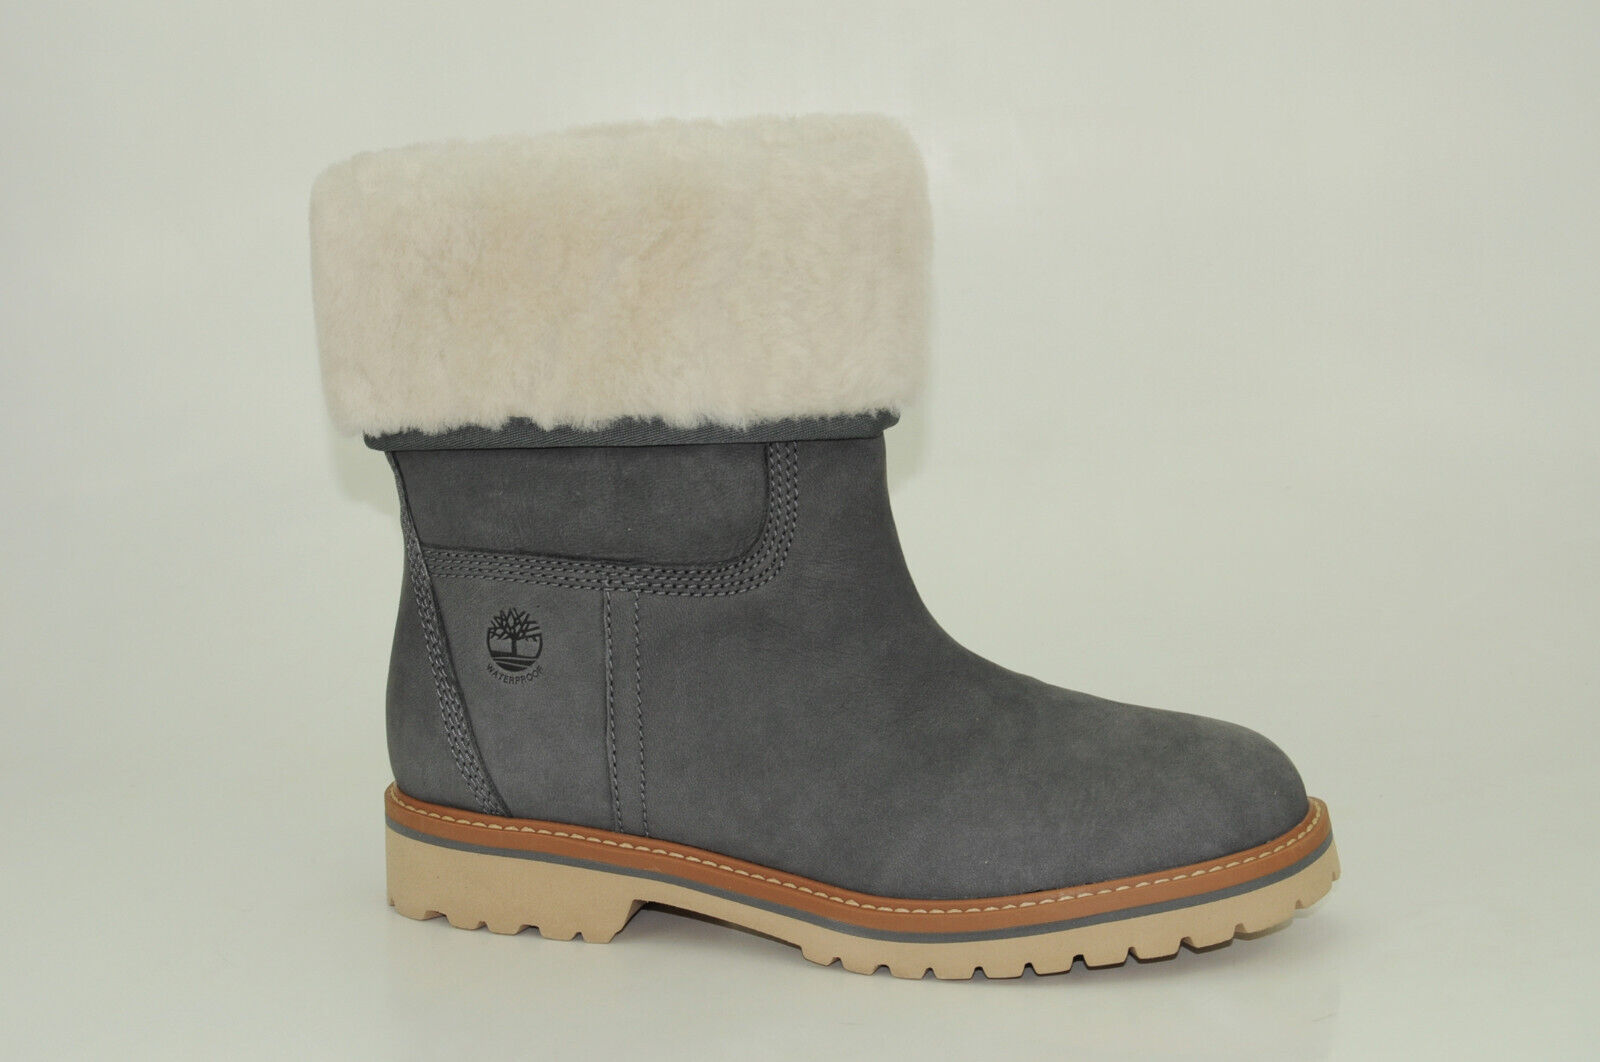 Timberland Chamonix Valley Boots Waterproof Winter Warm Gefüttert Damen Stiefel